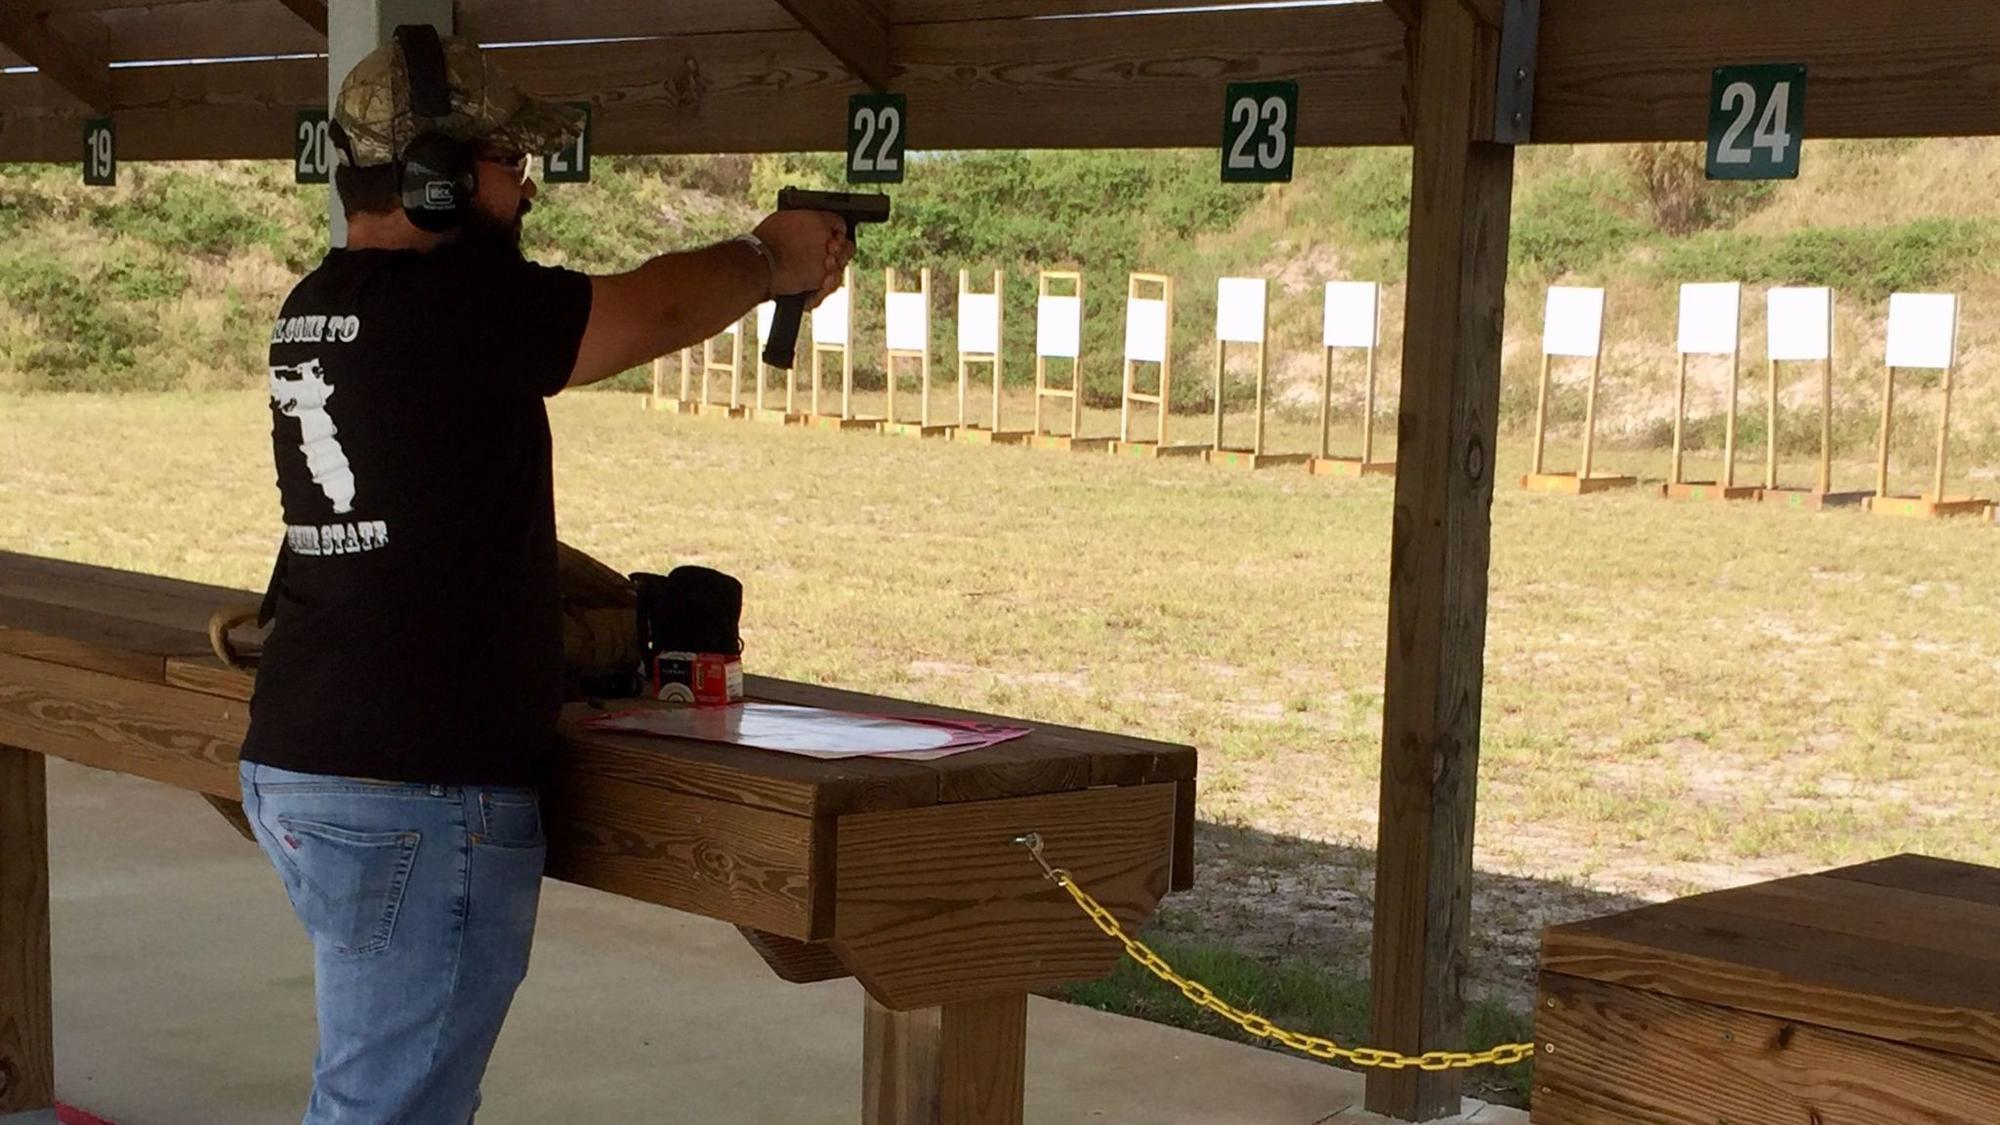 New public gun range opens in rural slice of Osceola - Orlando Sentinel